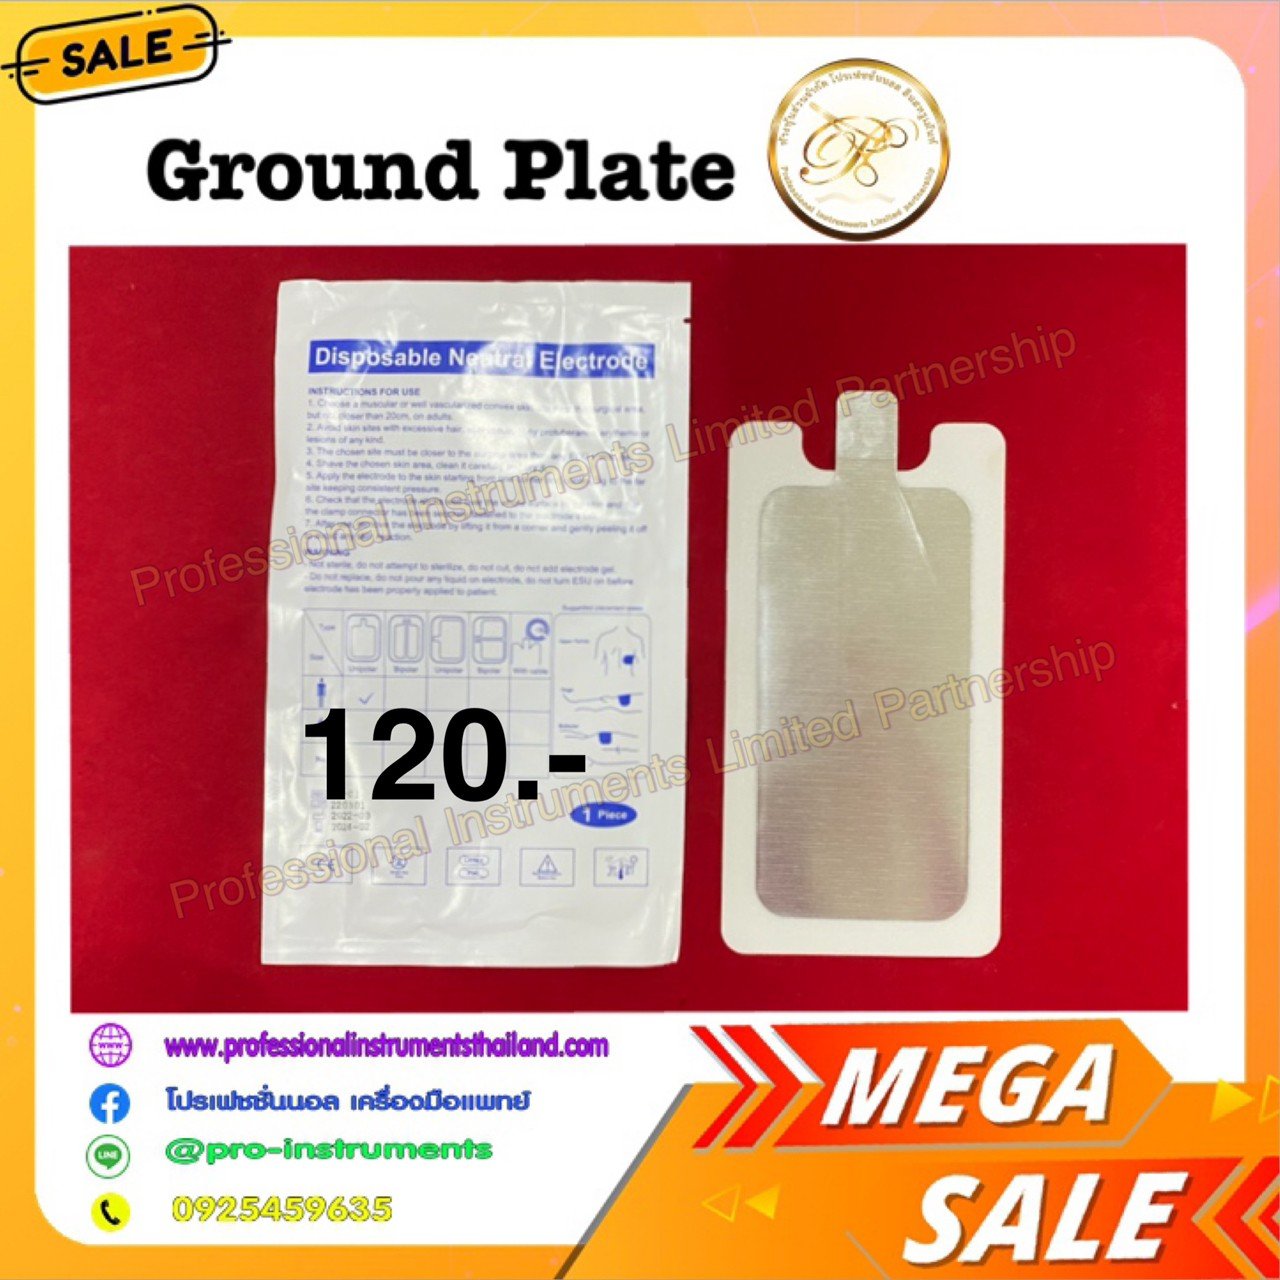 Ground Plate